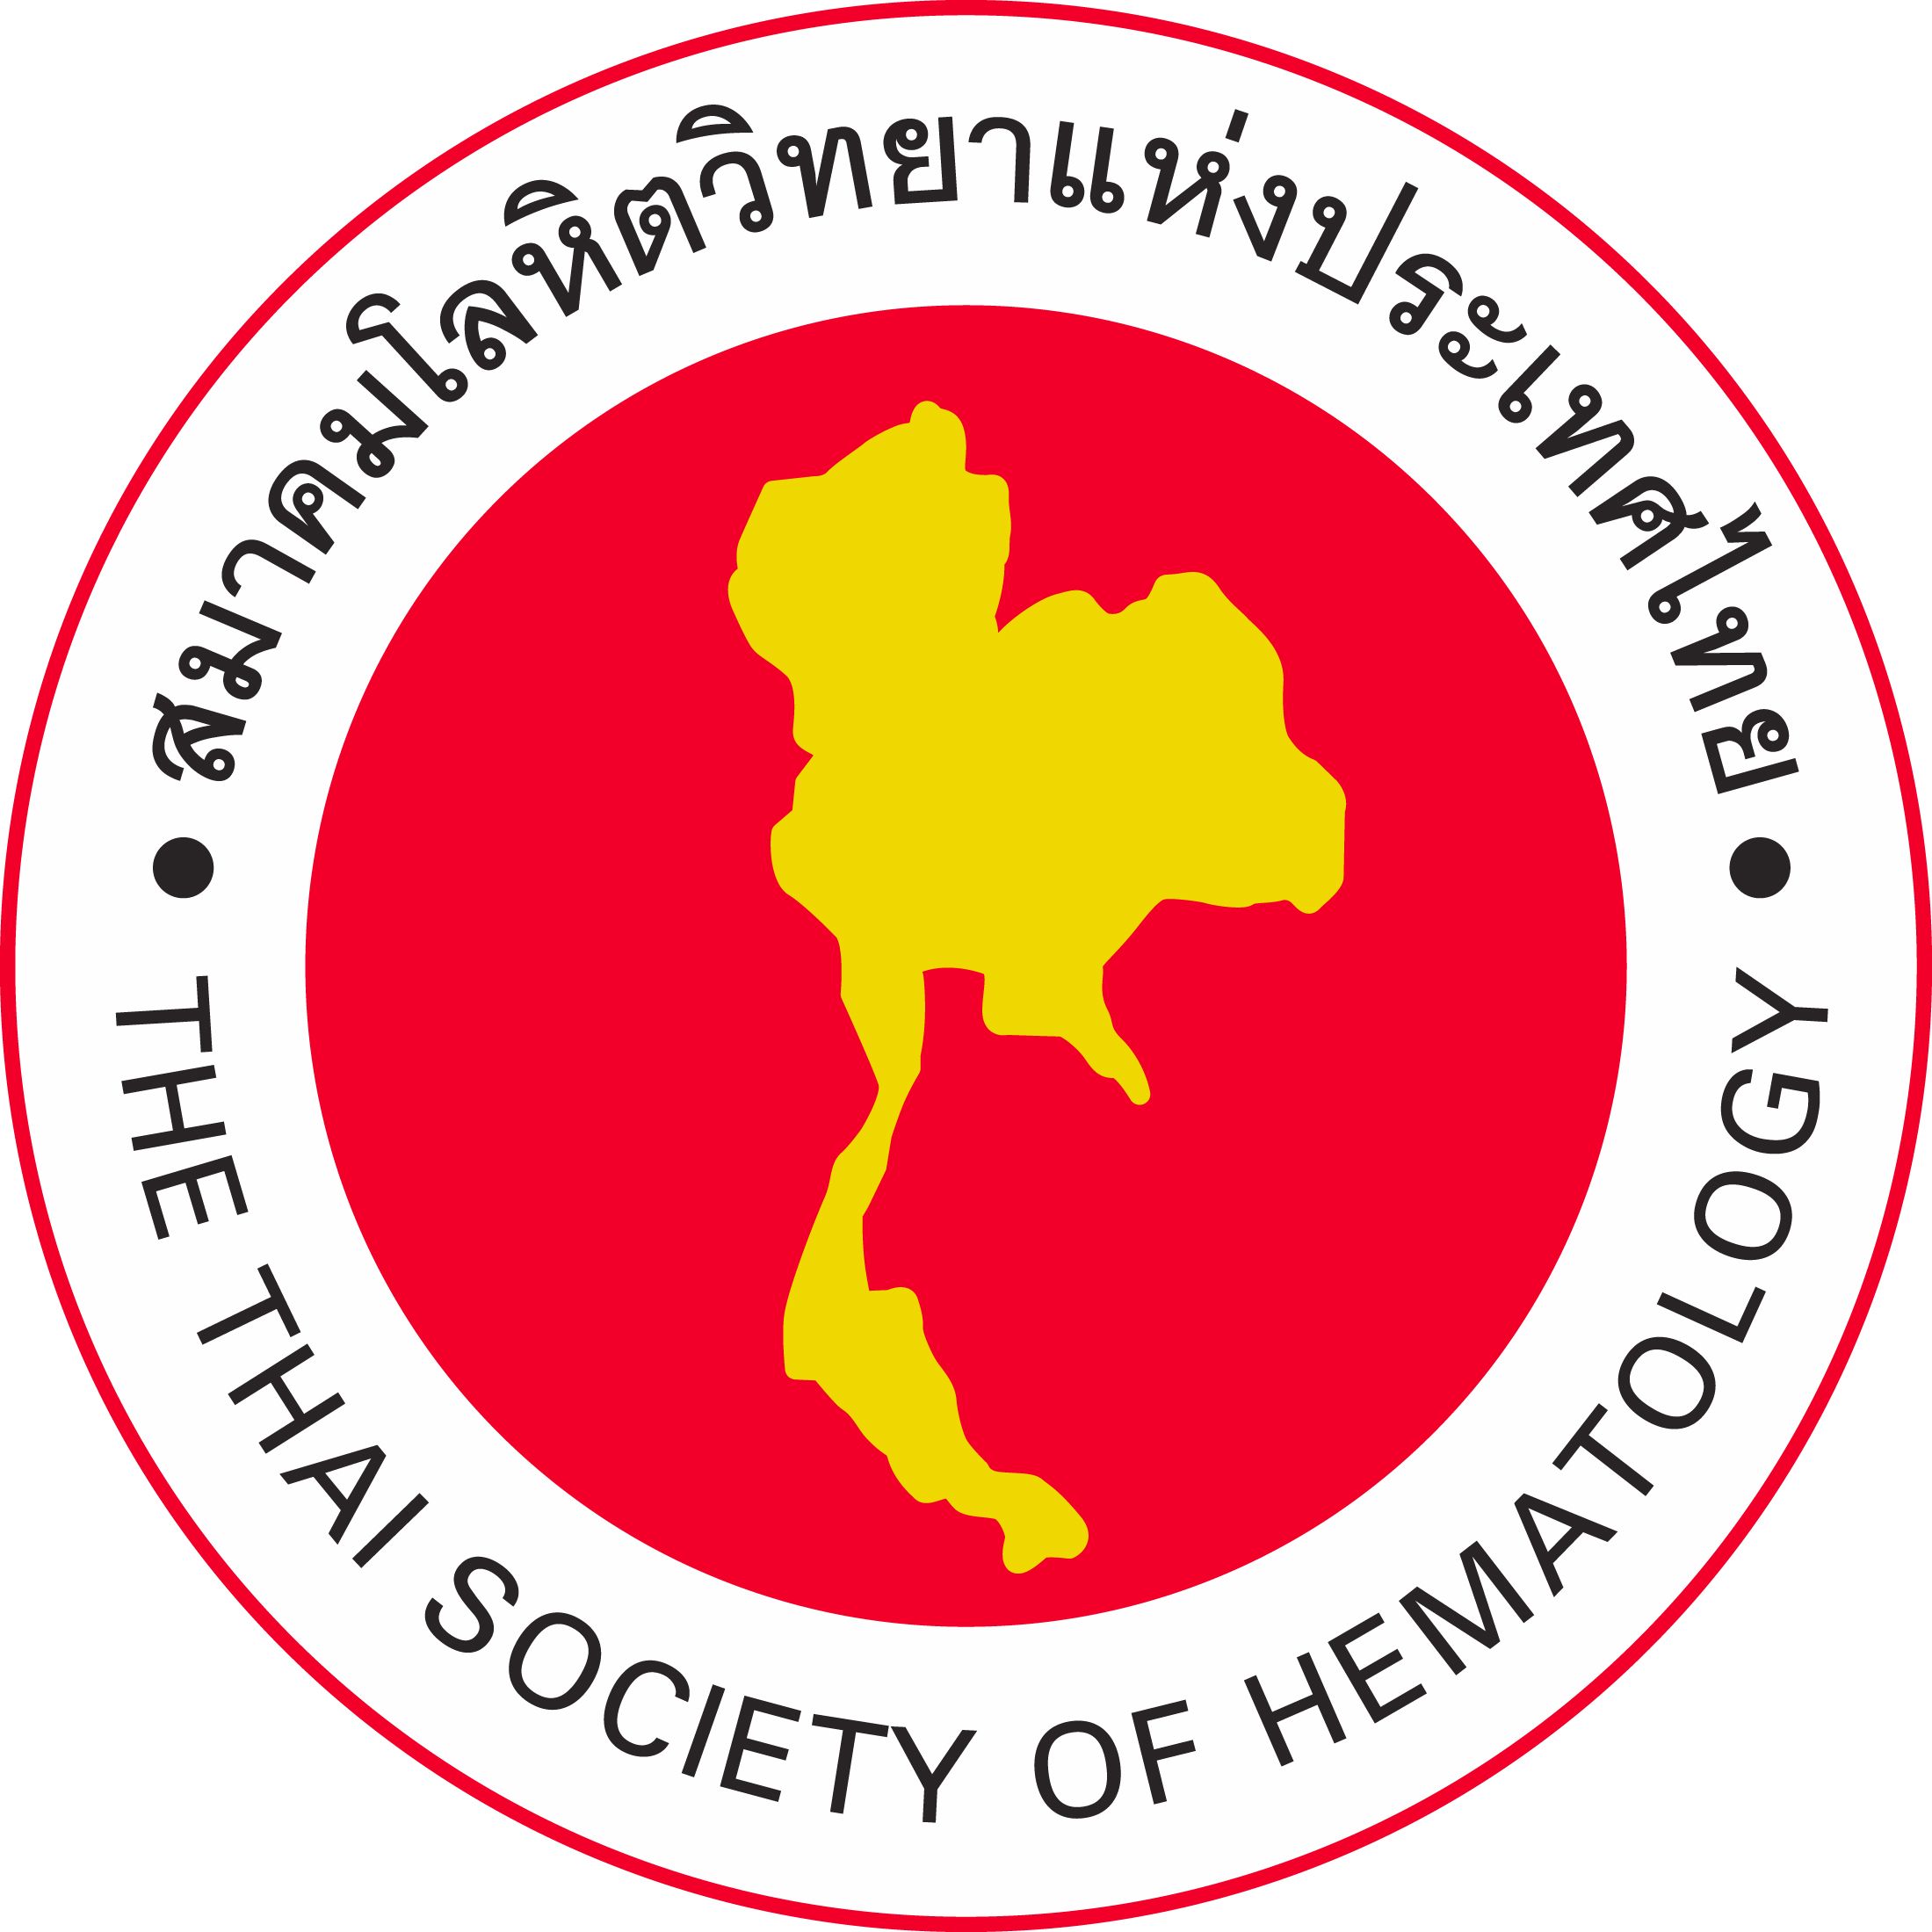 The Thai Society of Hematology